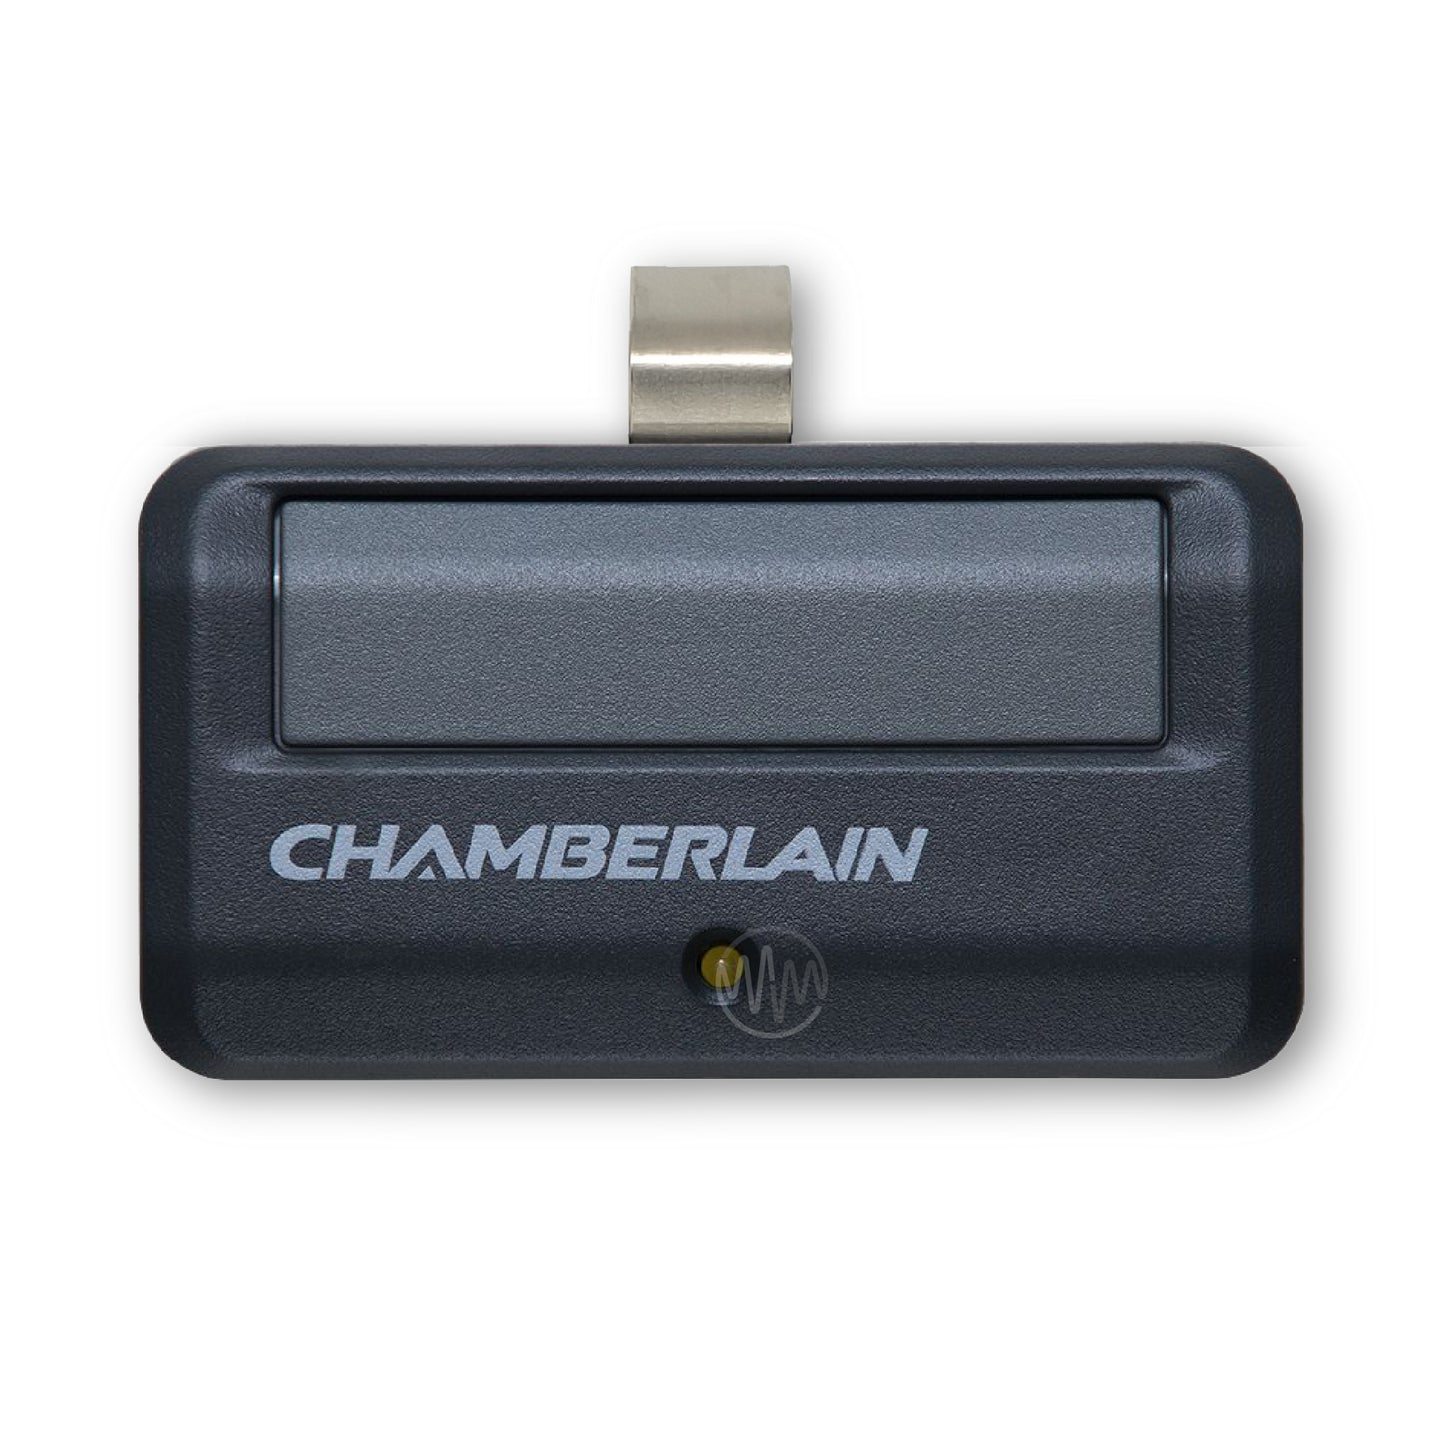 Chamberlain +2.0 E940C Garage Remote